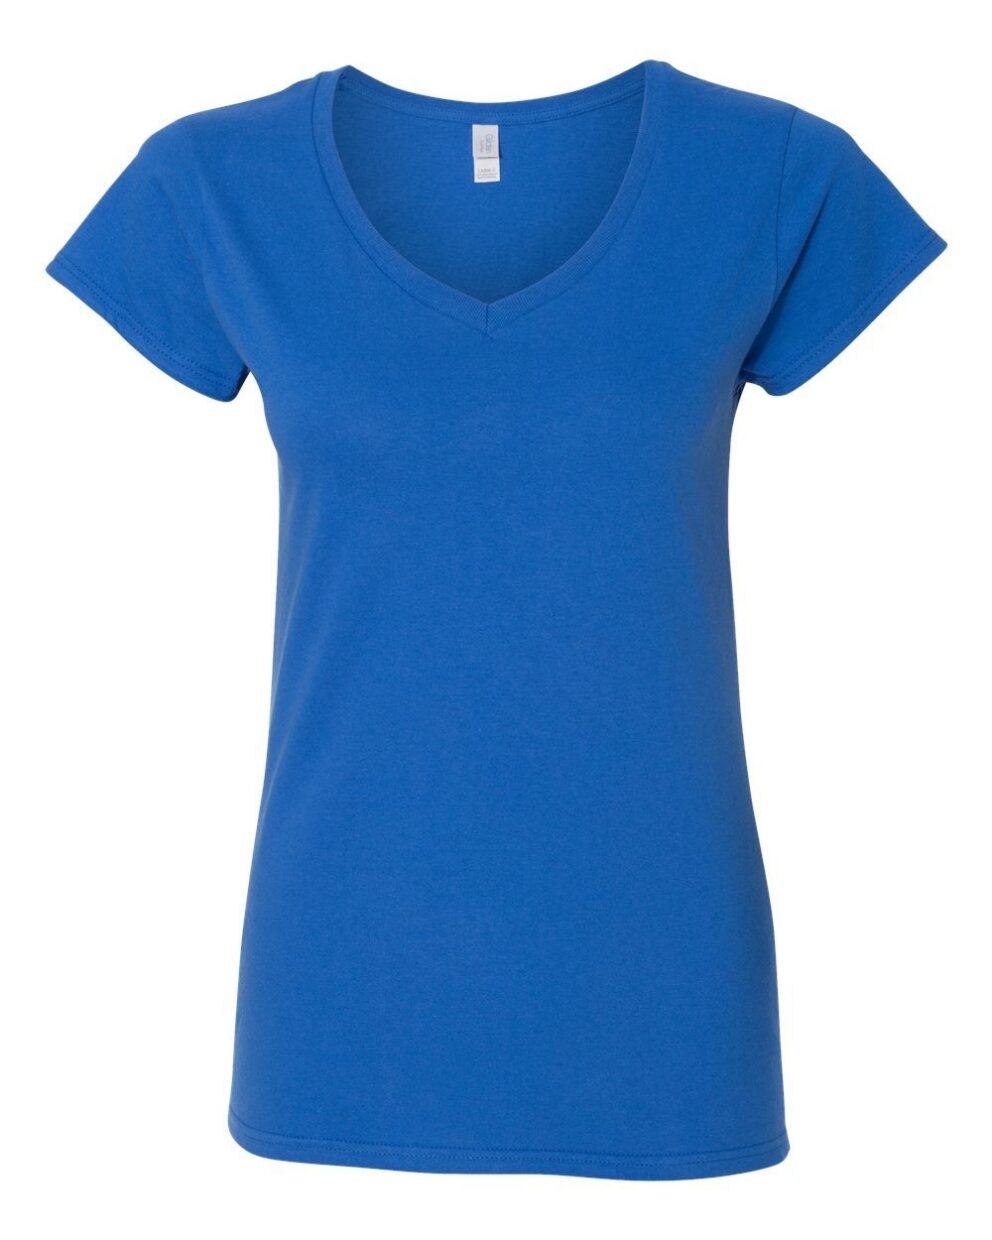 Ladies V-neck Royal Blue Cotton T-shirt